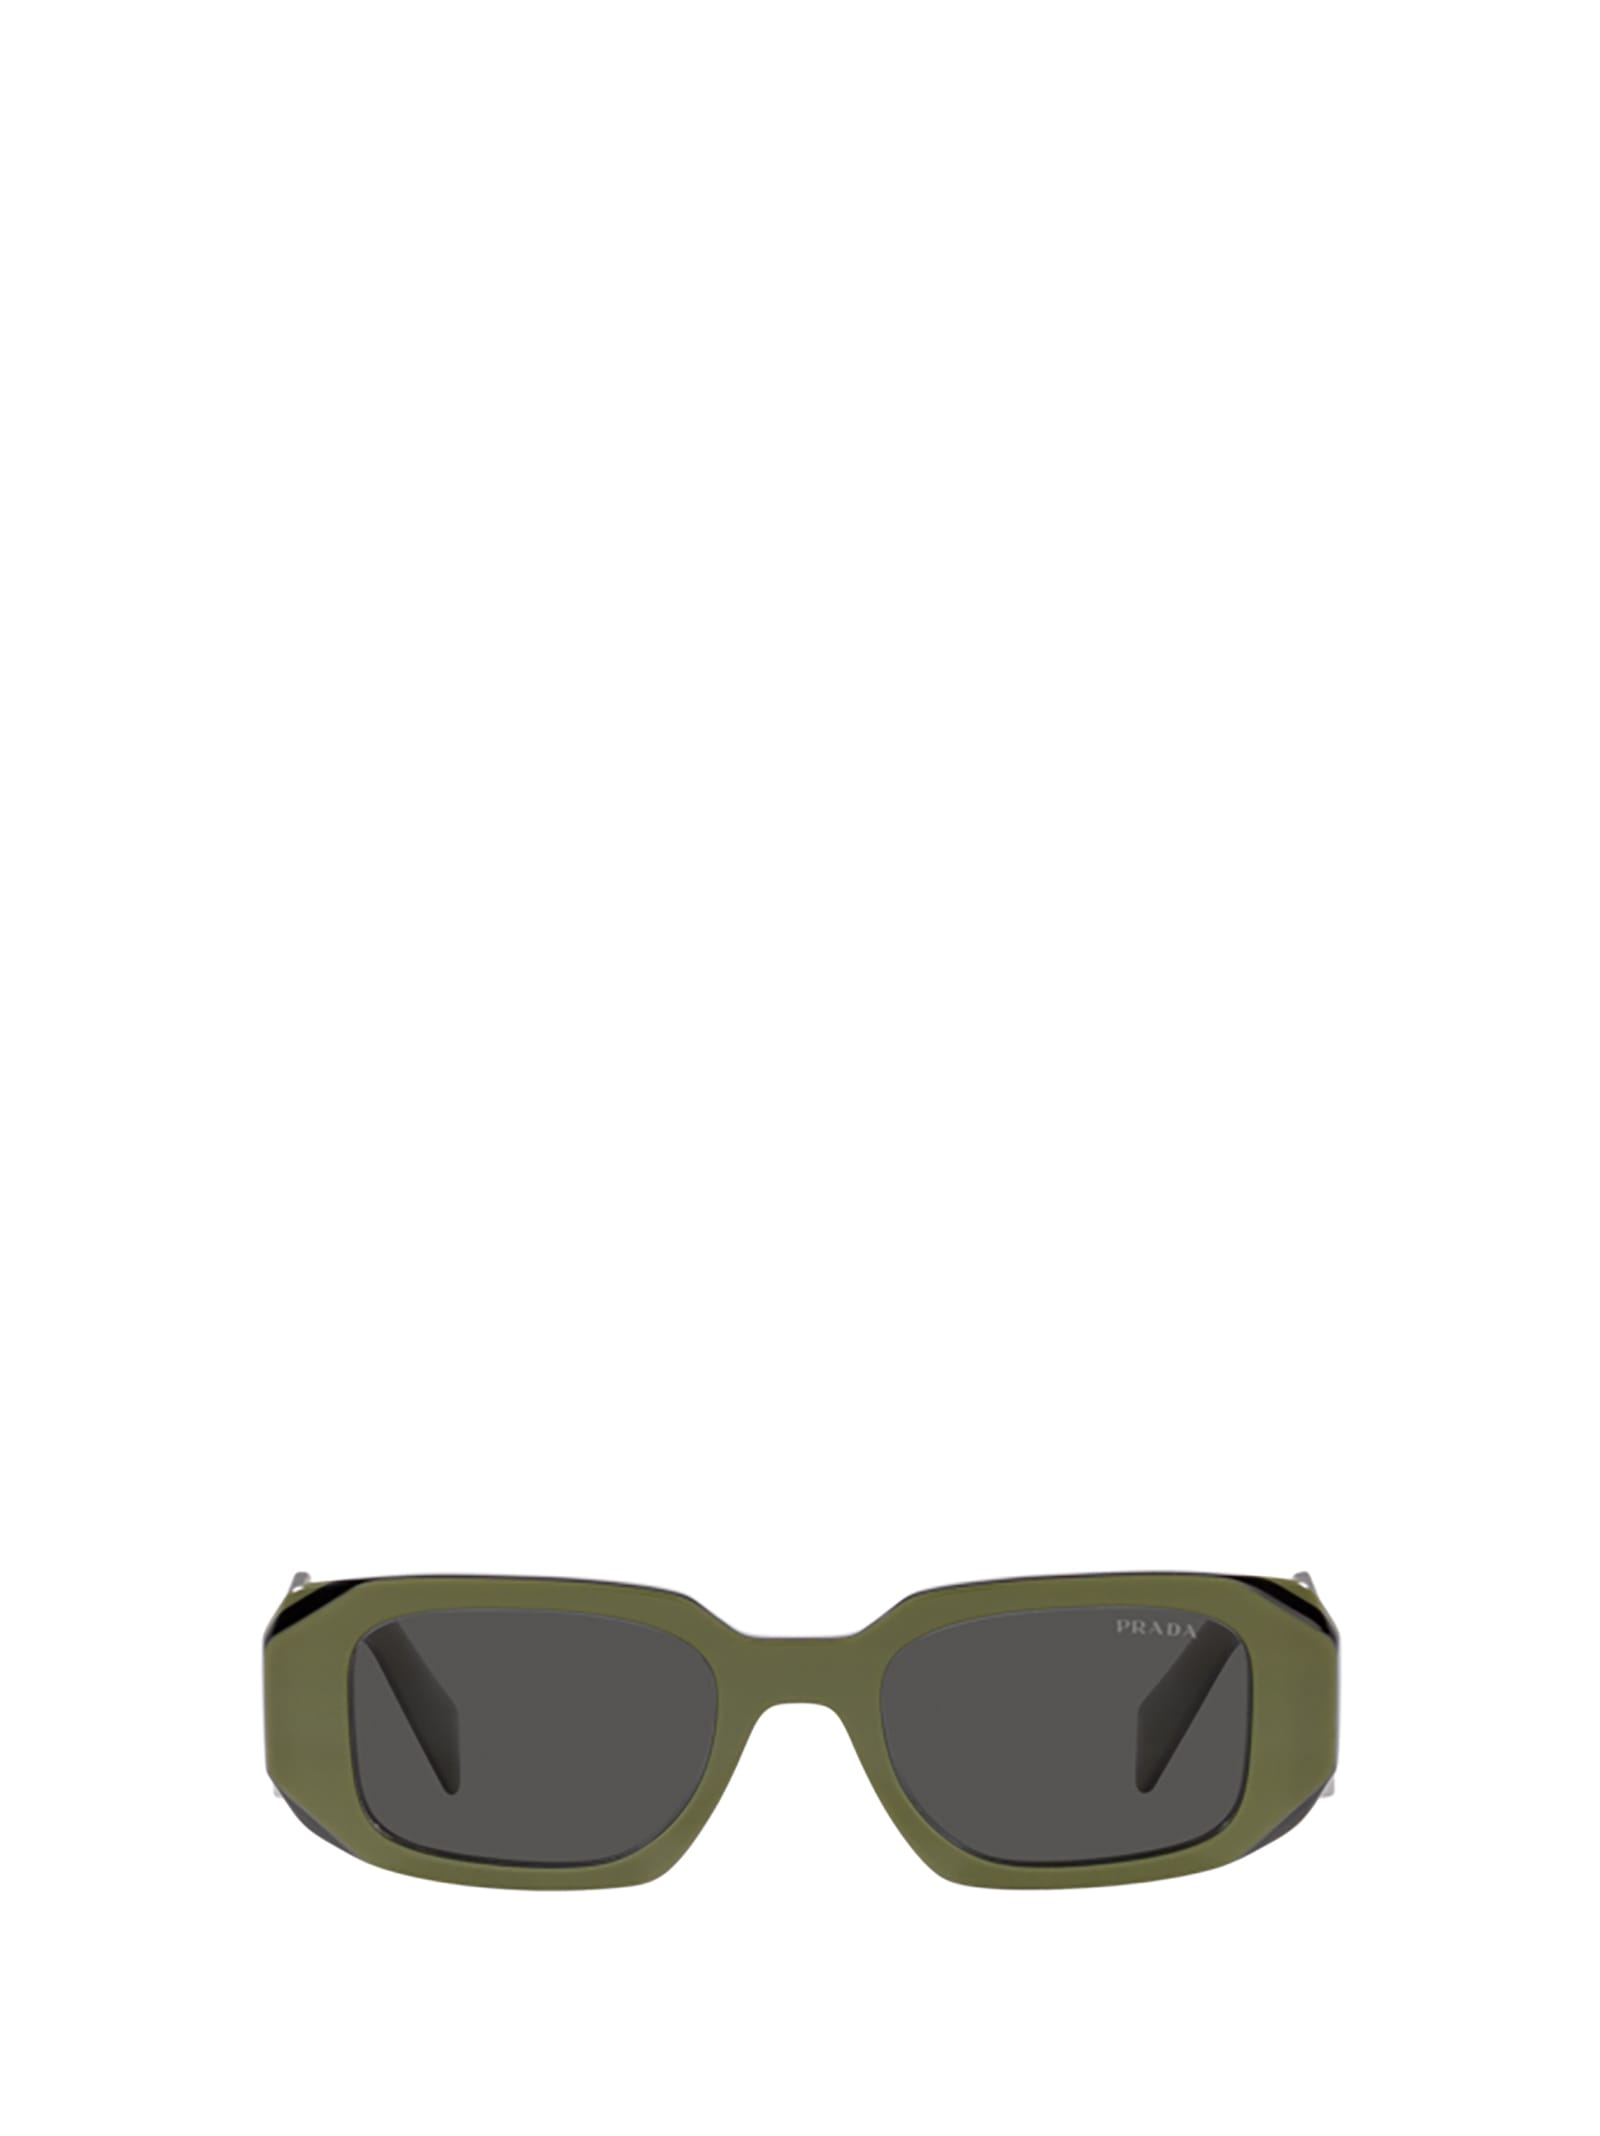 Prada Pr 17ws Sage / Black Sunglasses In Dark Grey